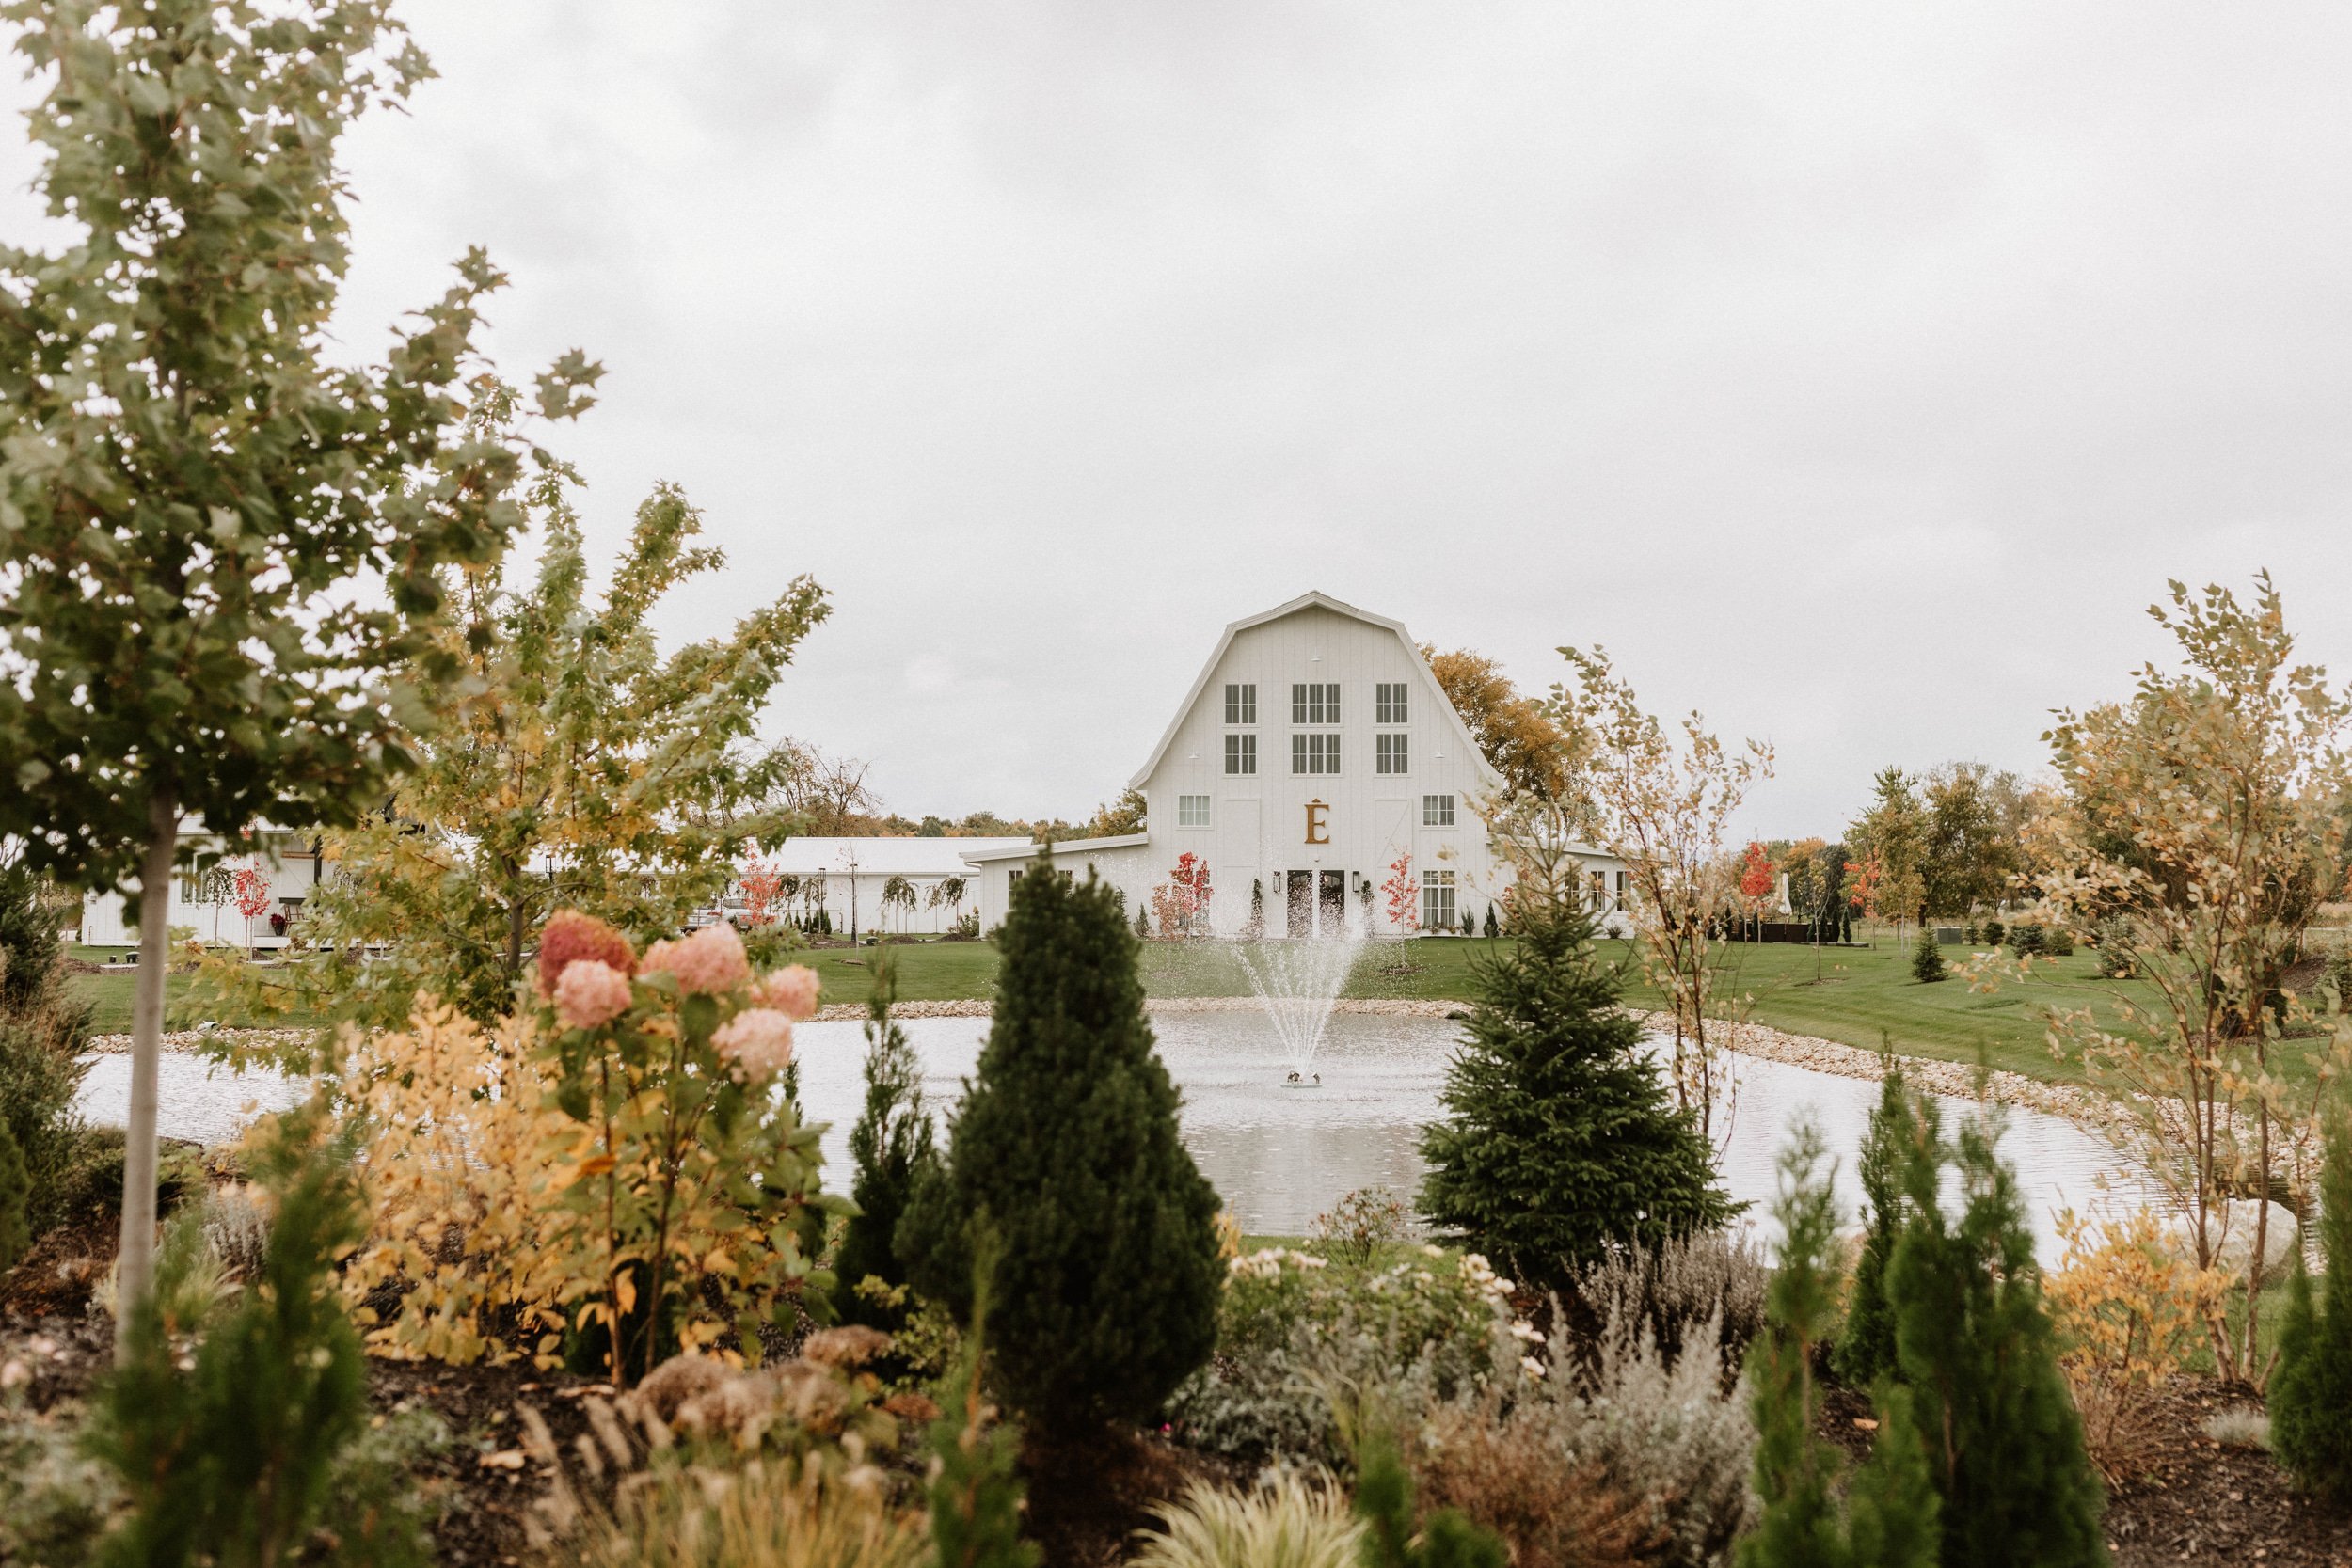 Etre farms Michigan wedding venue saint joseph st luxury barn all inclusive photography photographer -2.jpg